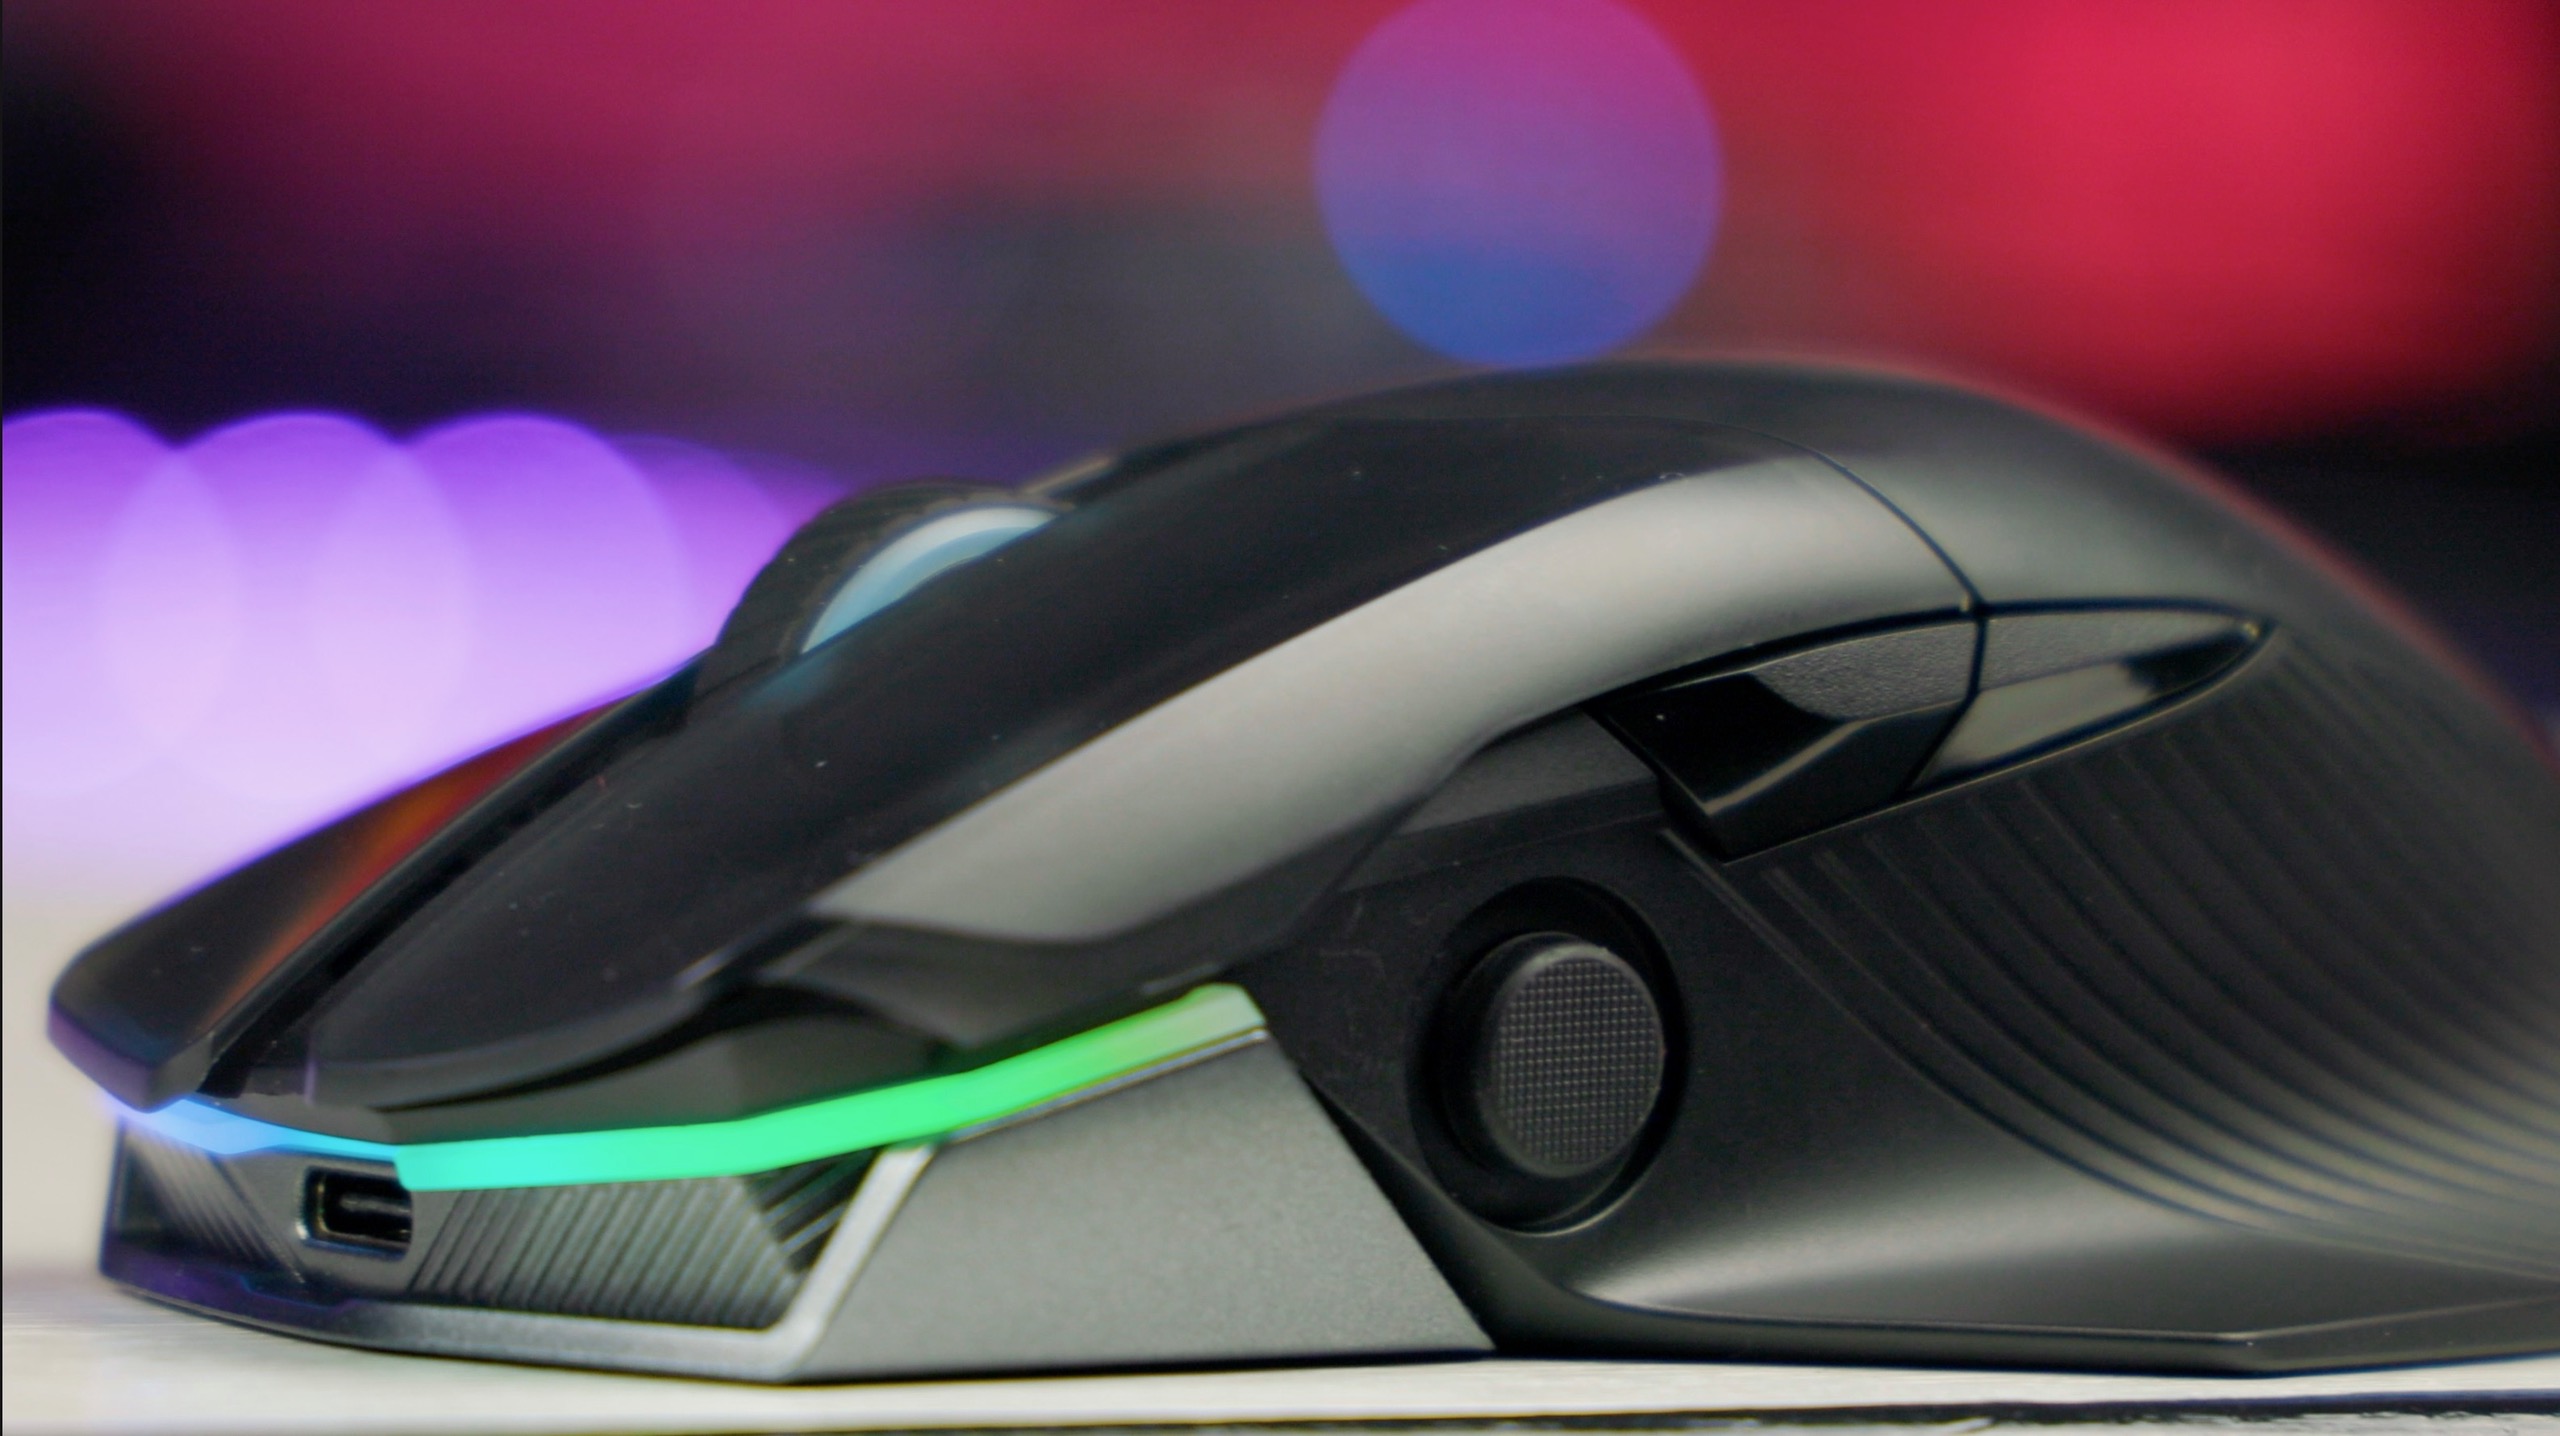 Asus ROG Chakram ergonomic RGB optical Qi gaming mouse with